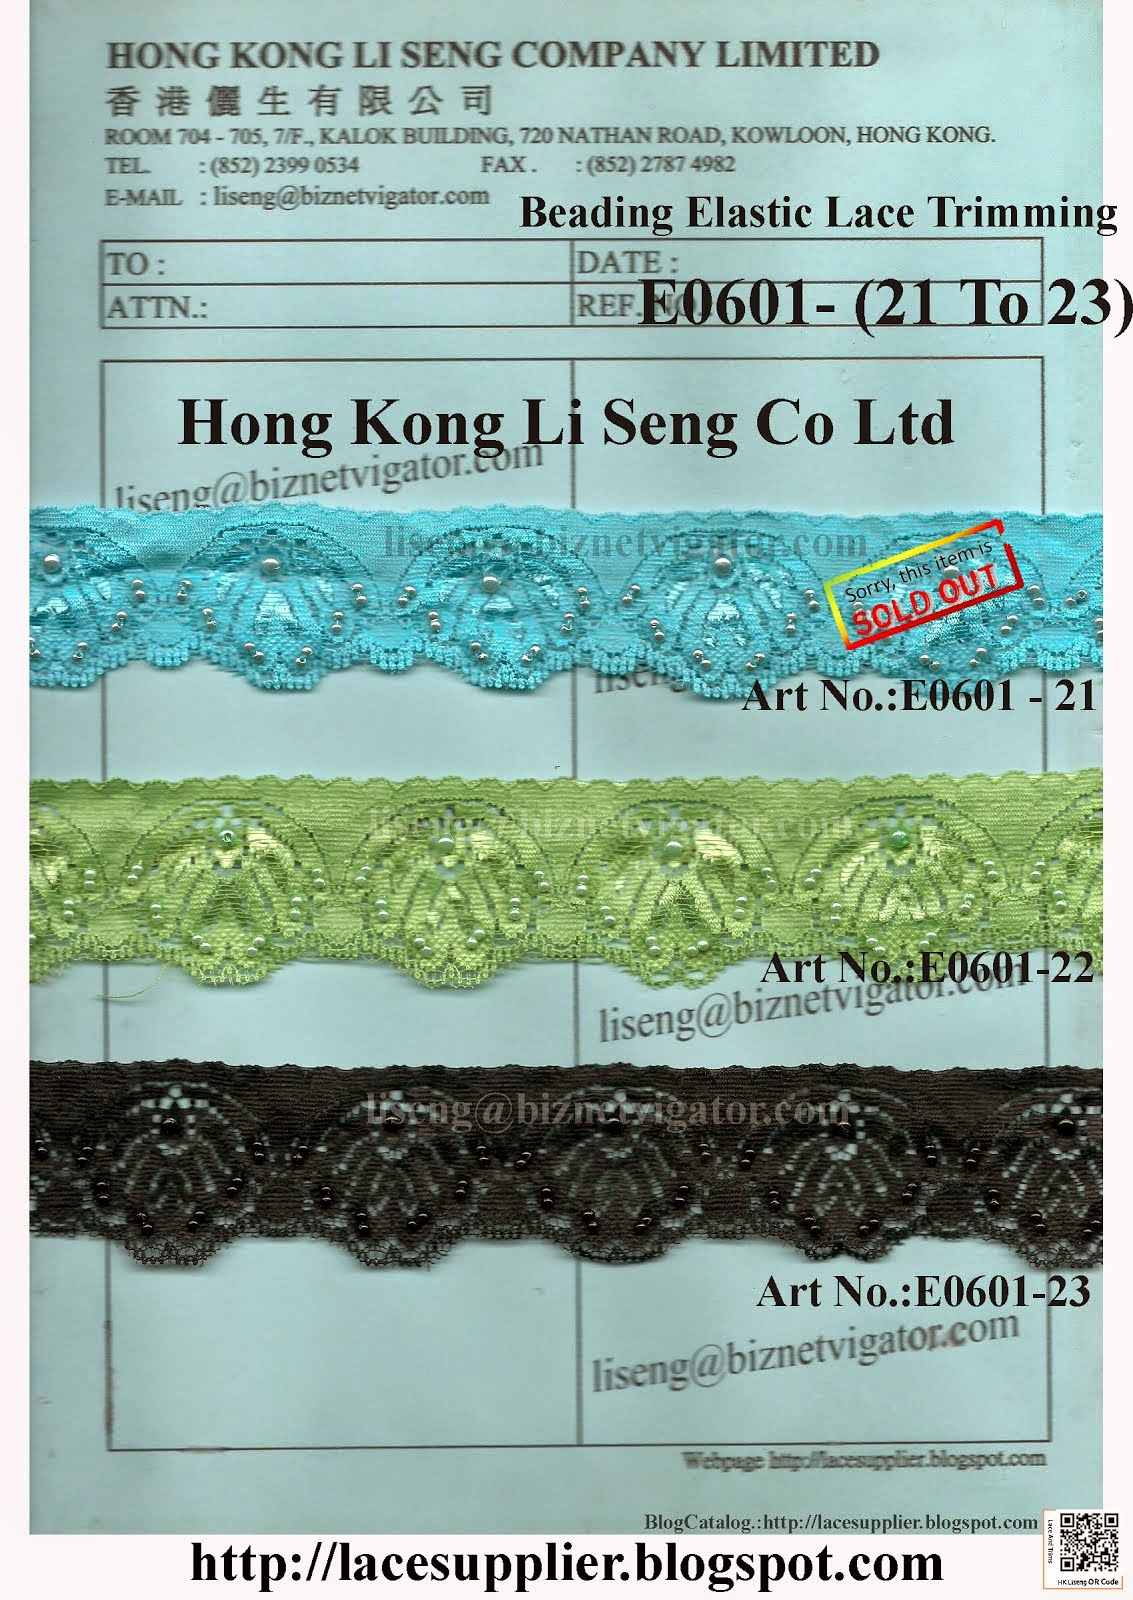 Beading Elastic Lace Trimming Supplier - Hong Kong Li Seng Co Ltd